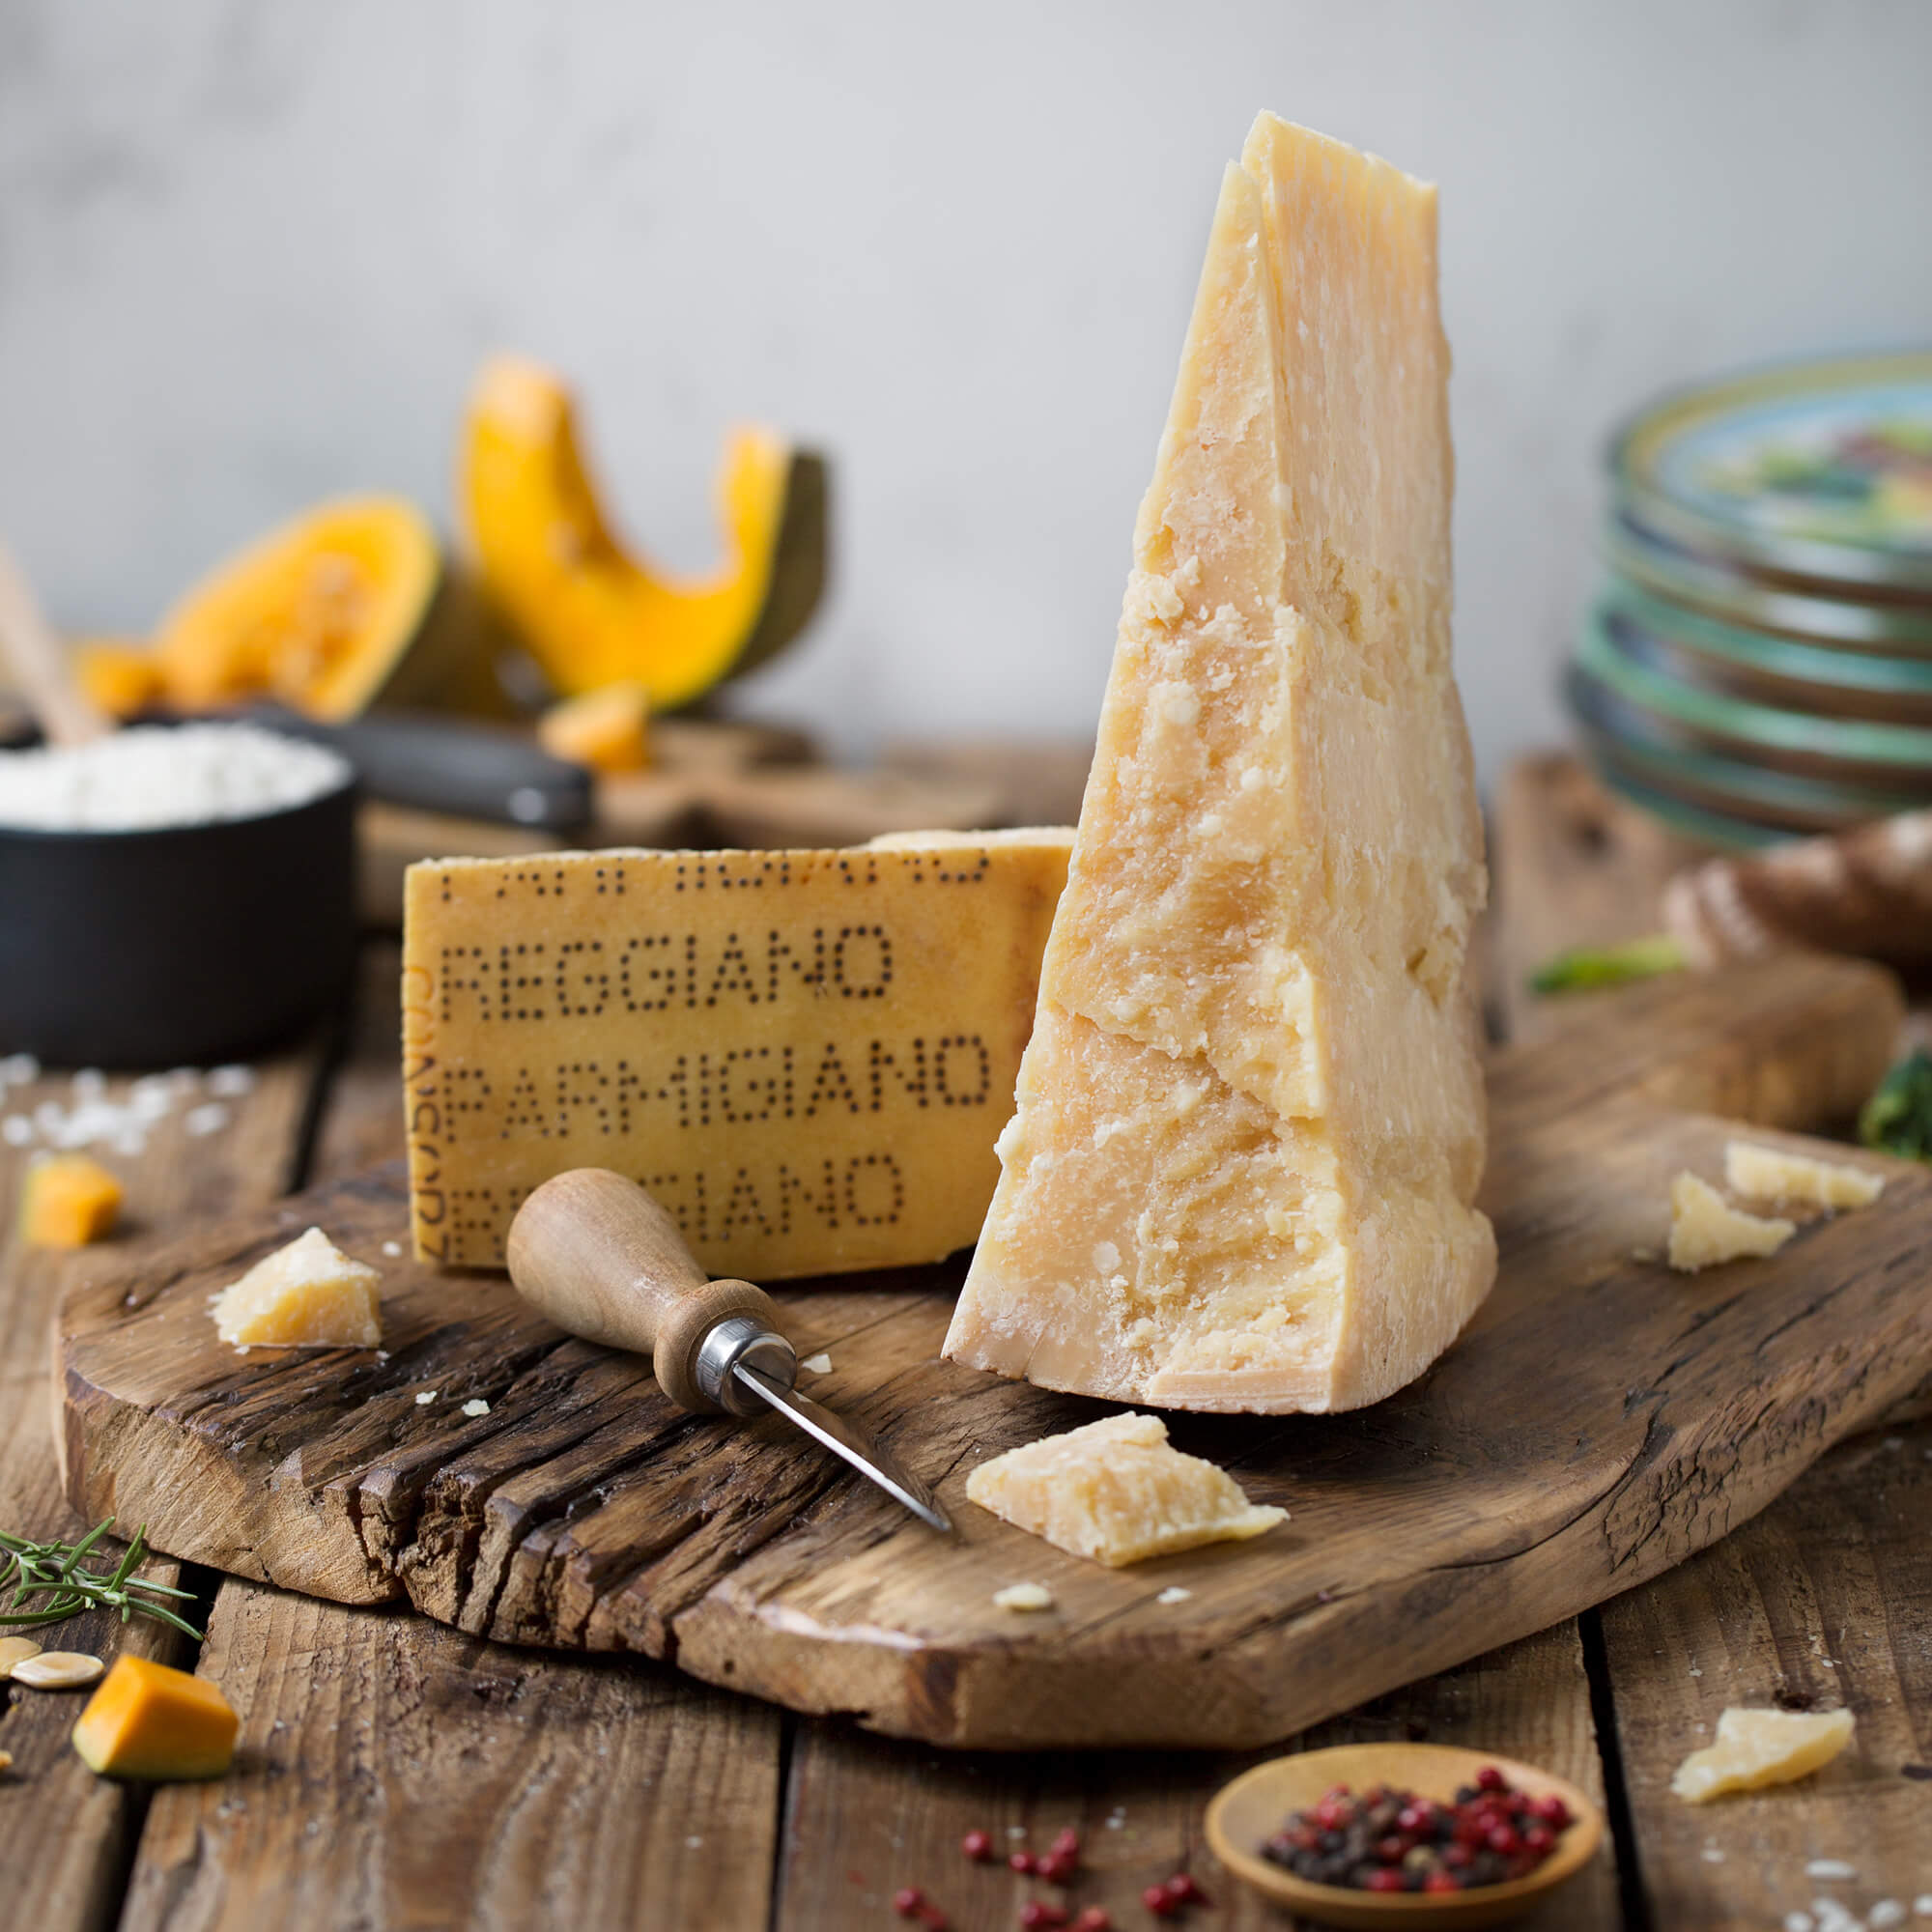 Parmigiano Reggiano DOP 60 months